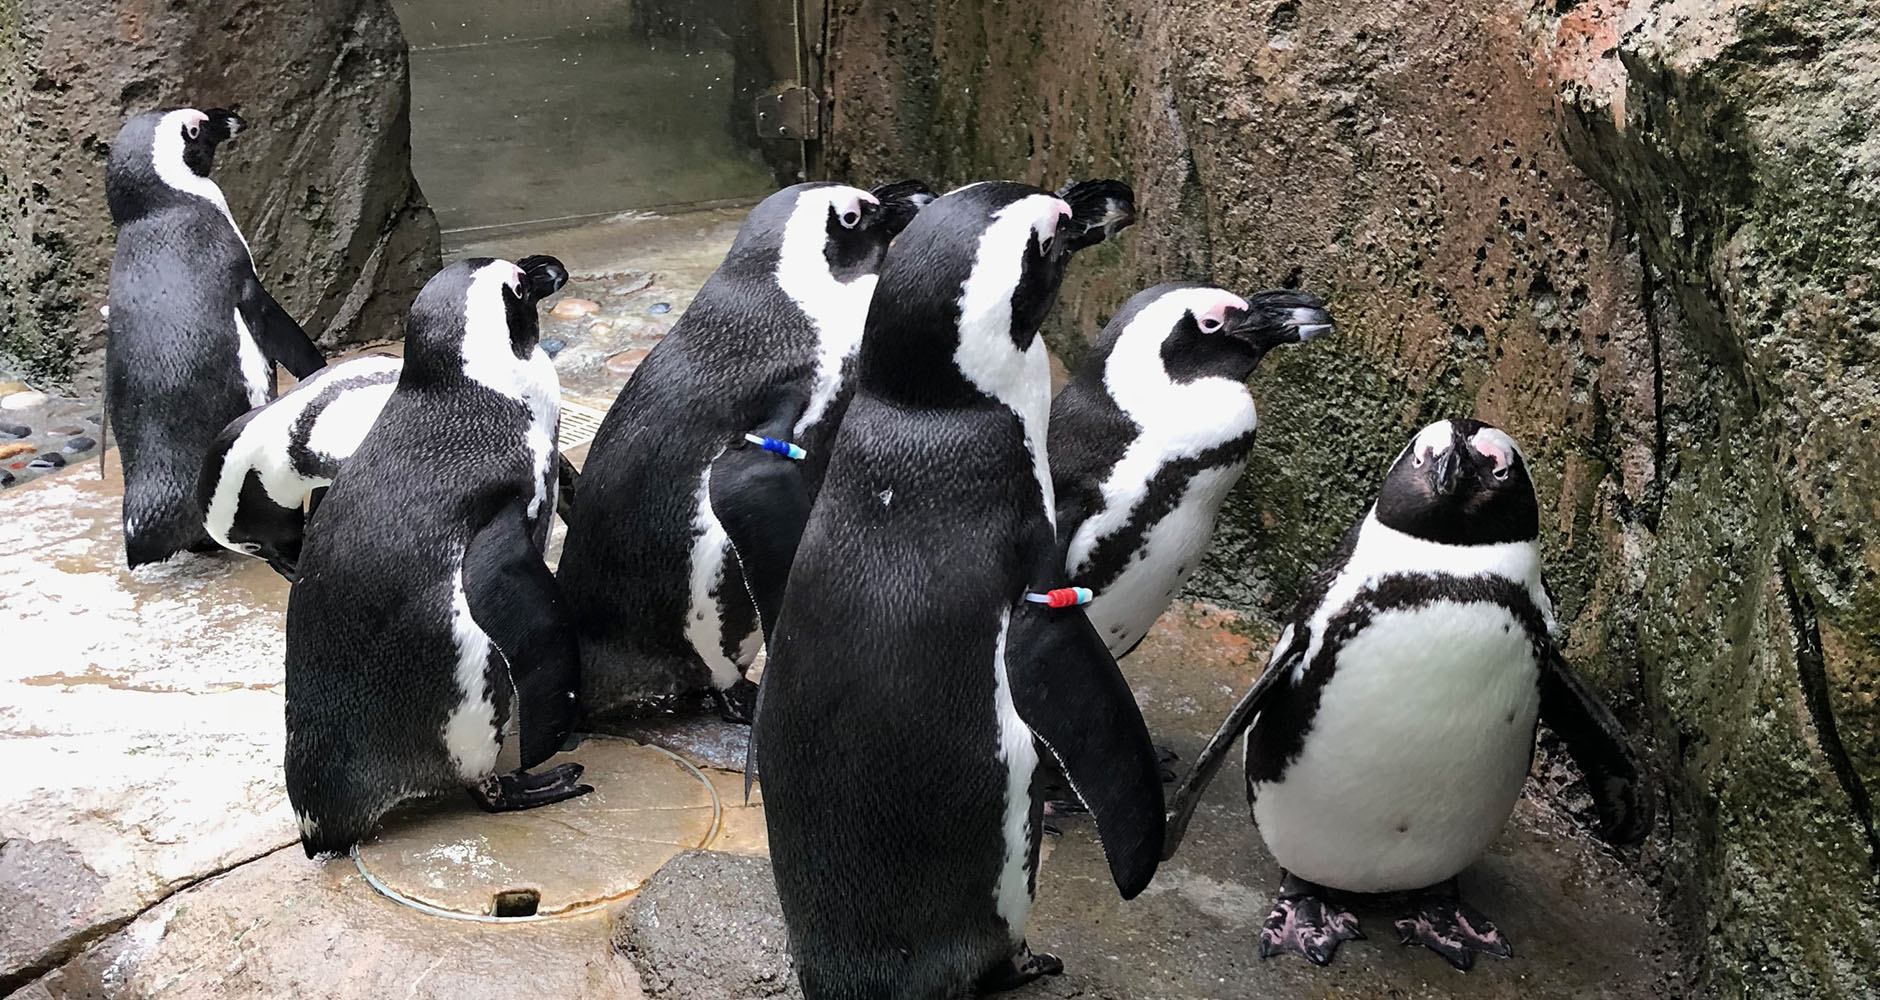 Visiting the penguins at Vancouver Aquarium, Canada